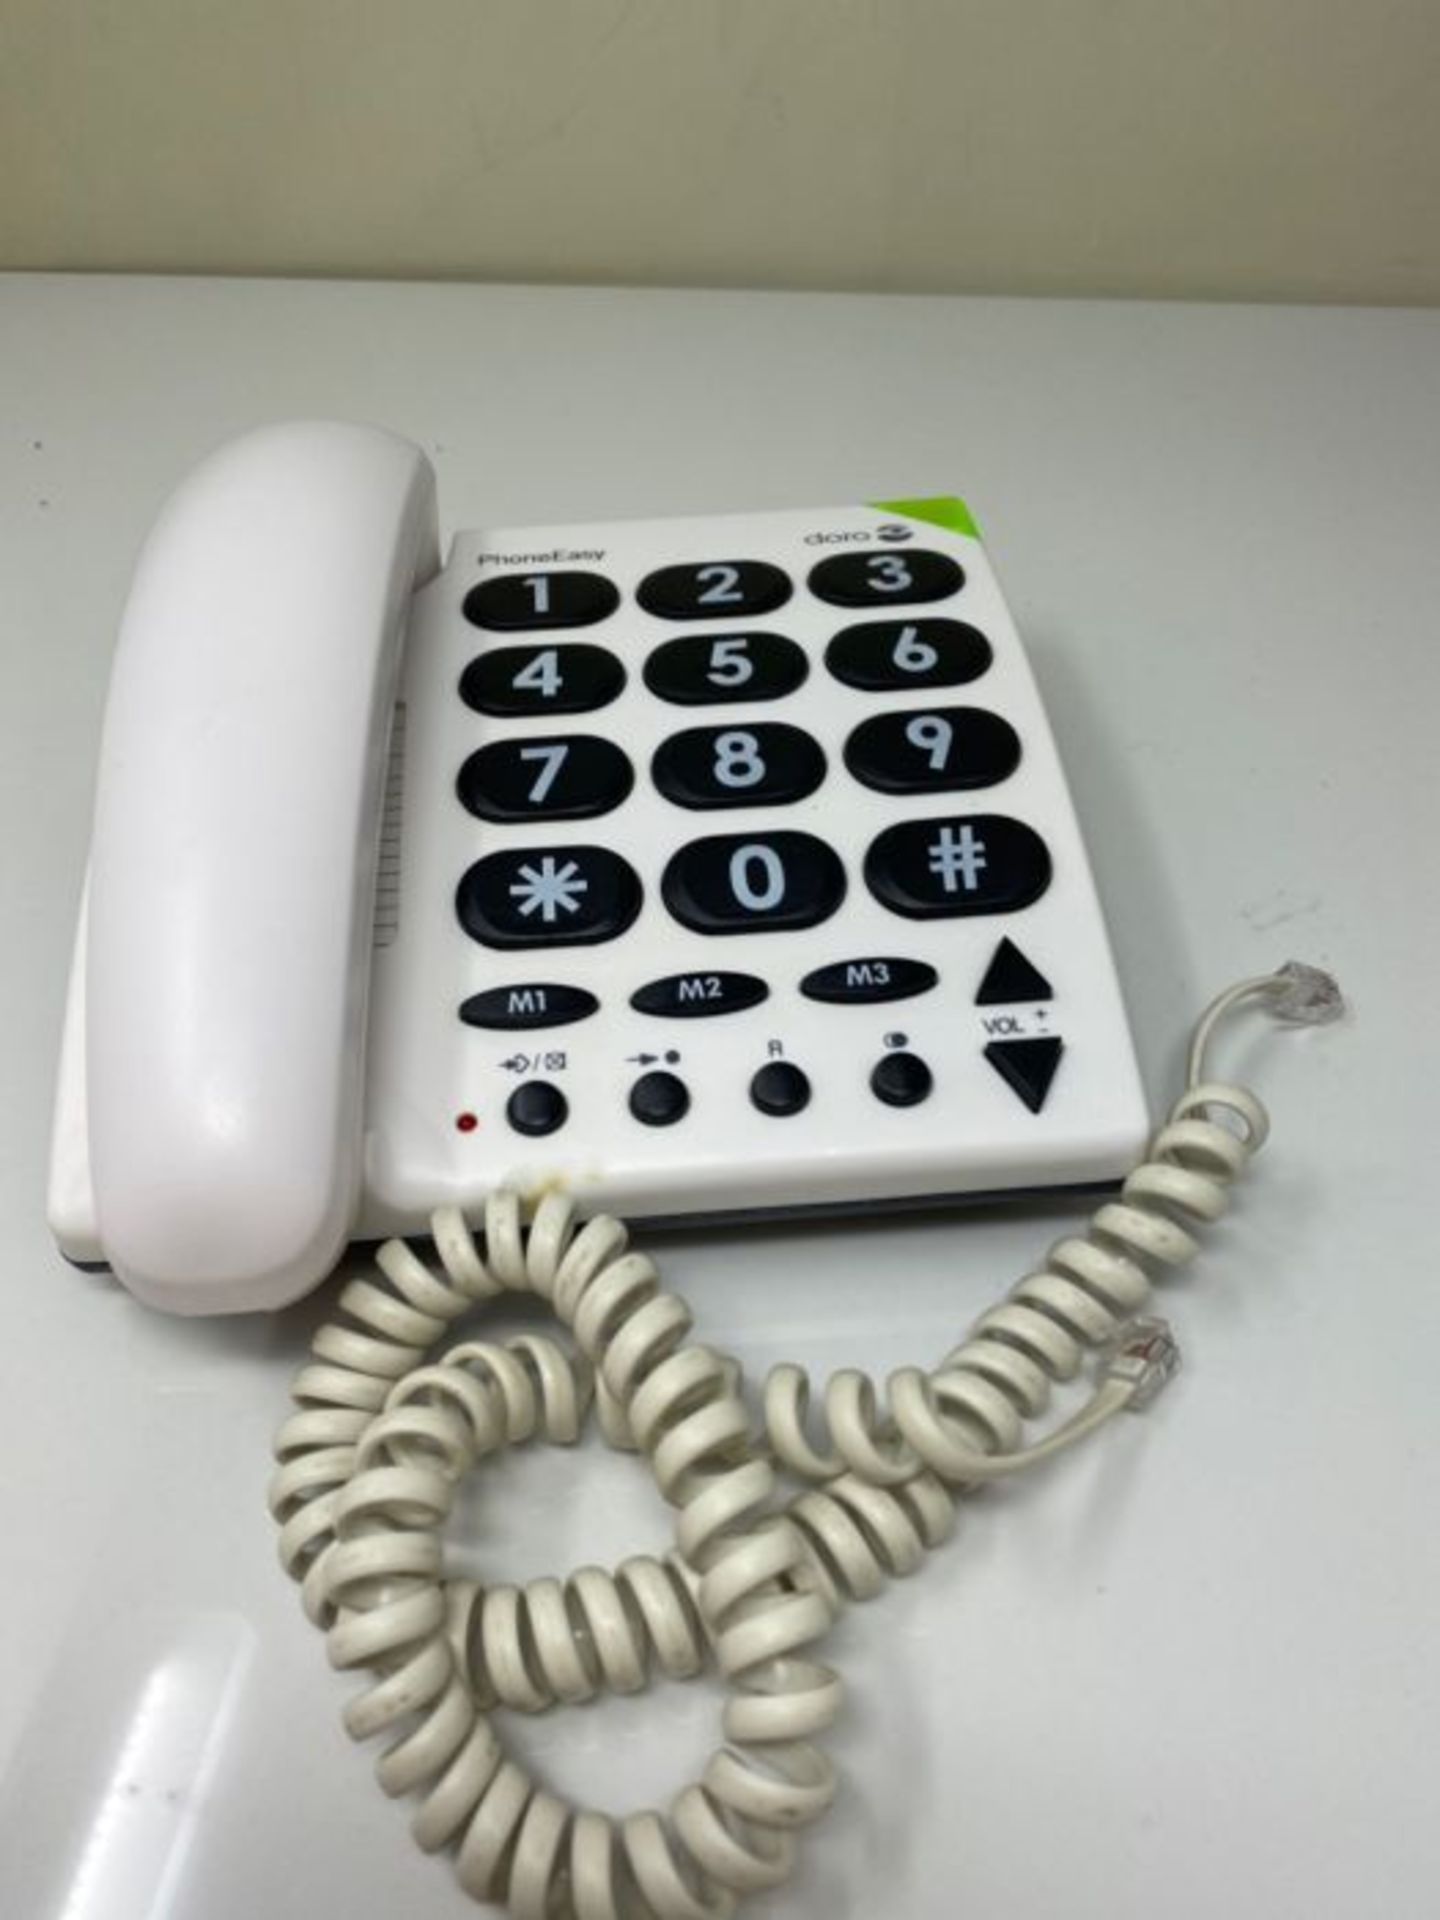 Doro PhoneEasy 311c Big Button Corded Telephone for Seniors (White) - Image 3 of 3